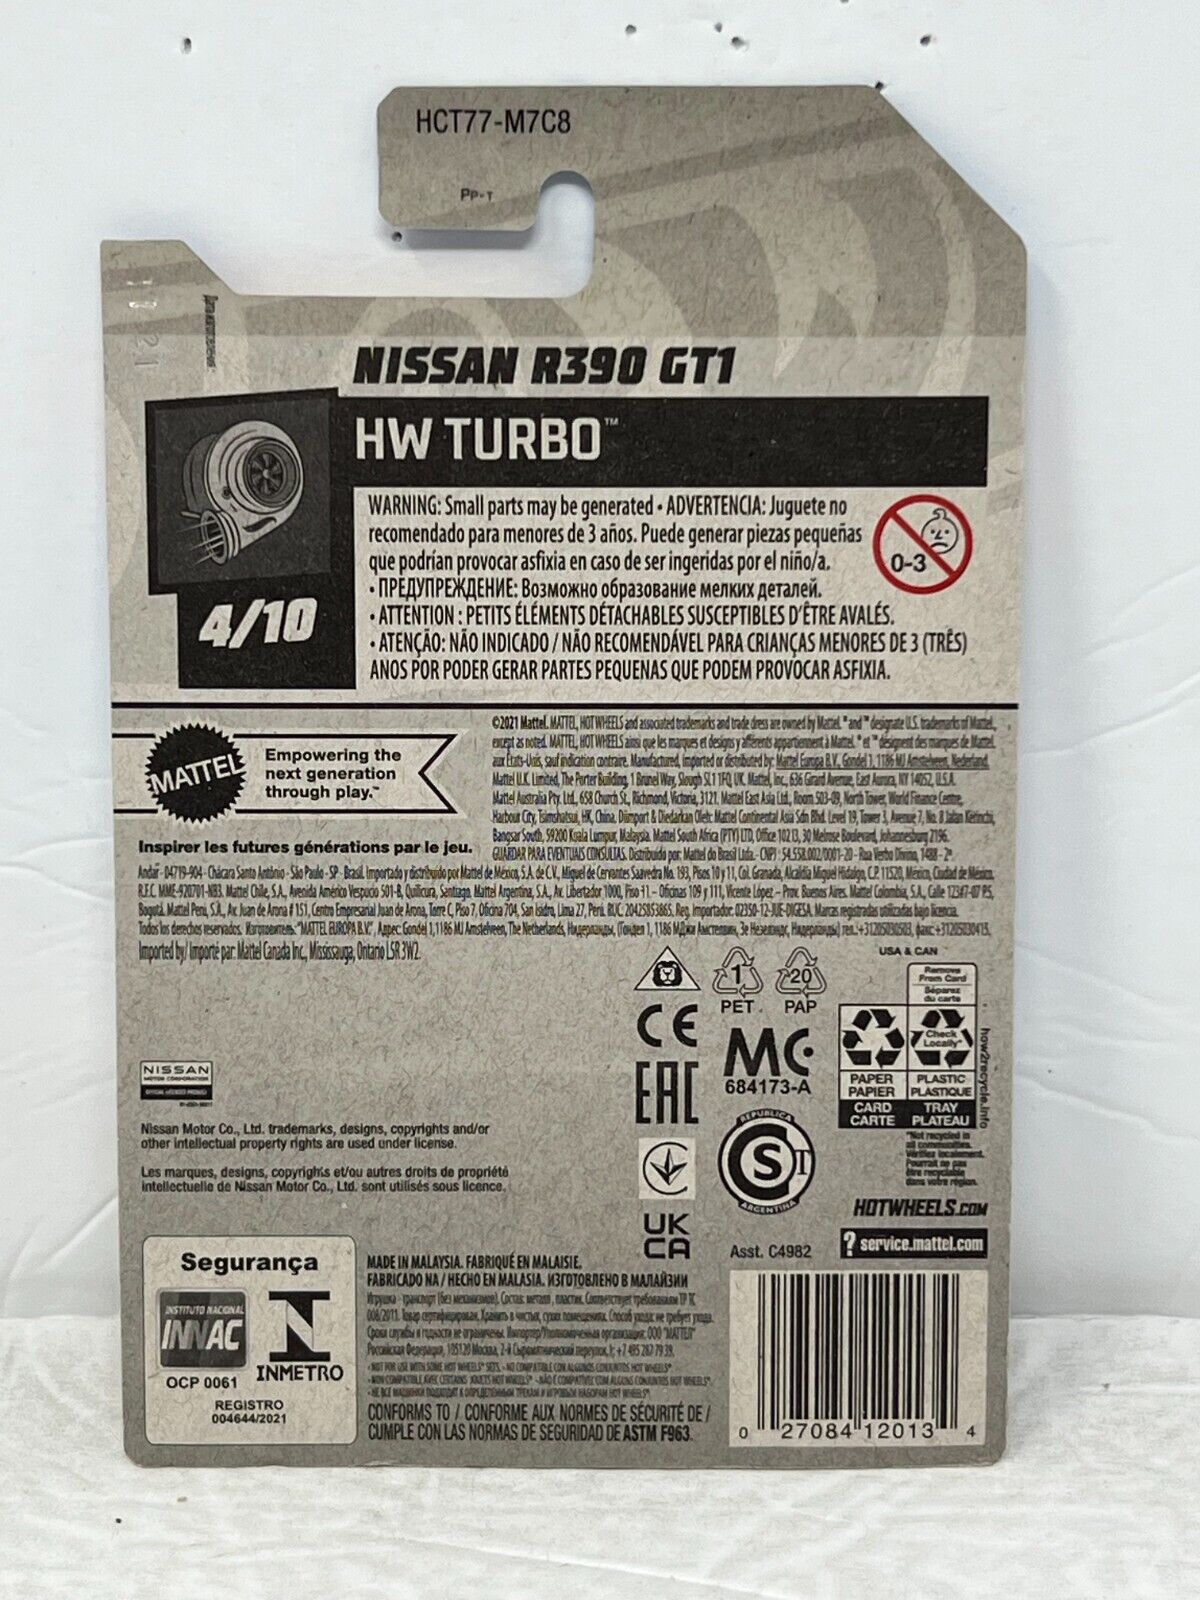 Hot Wheels HW Turbo Nissan R390 GTI JDM 1:64 Diecast